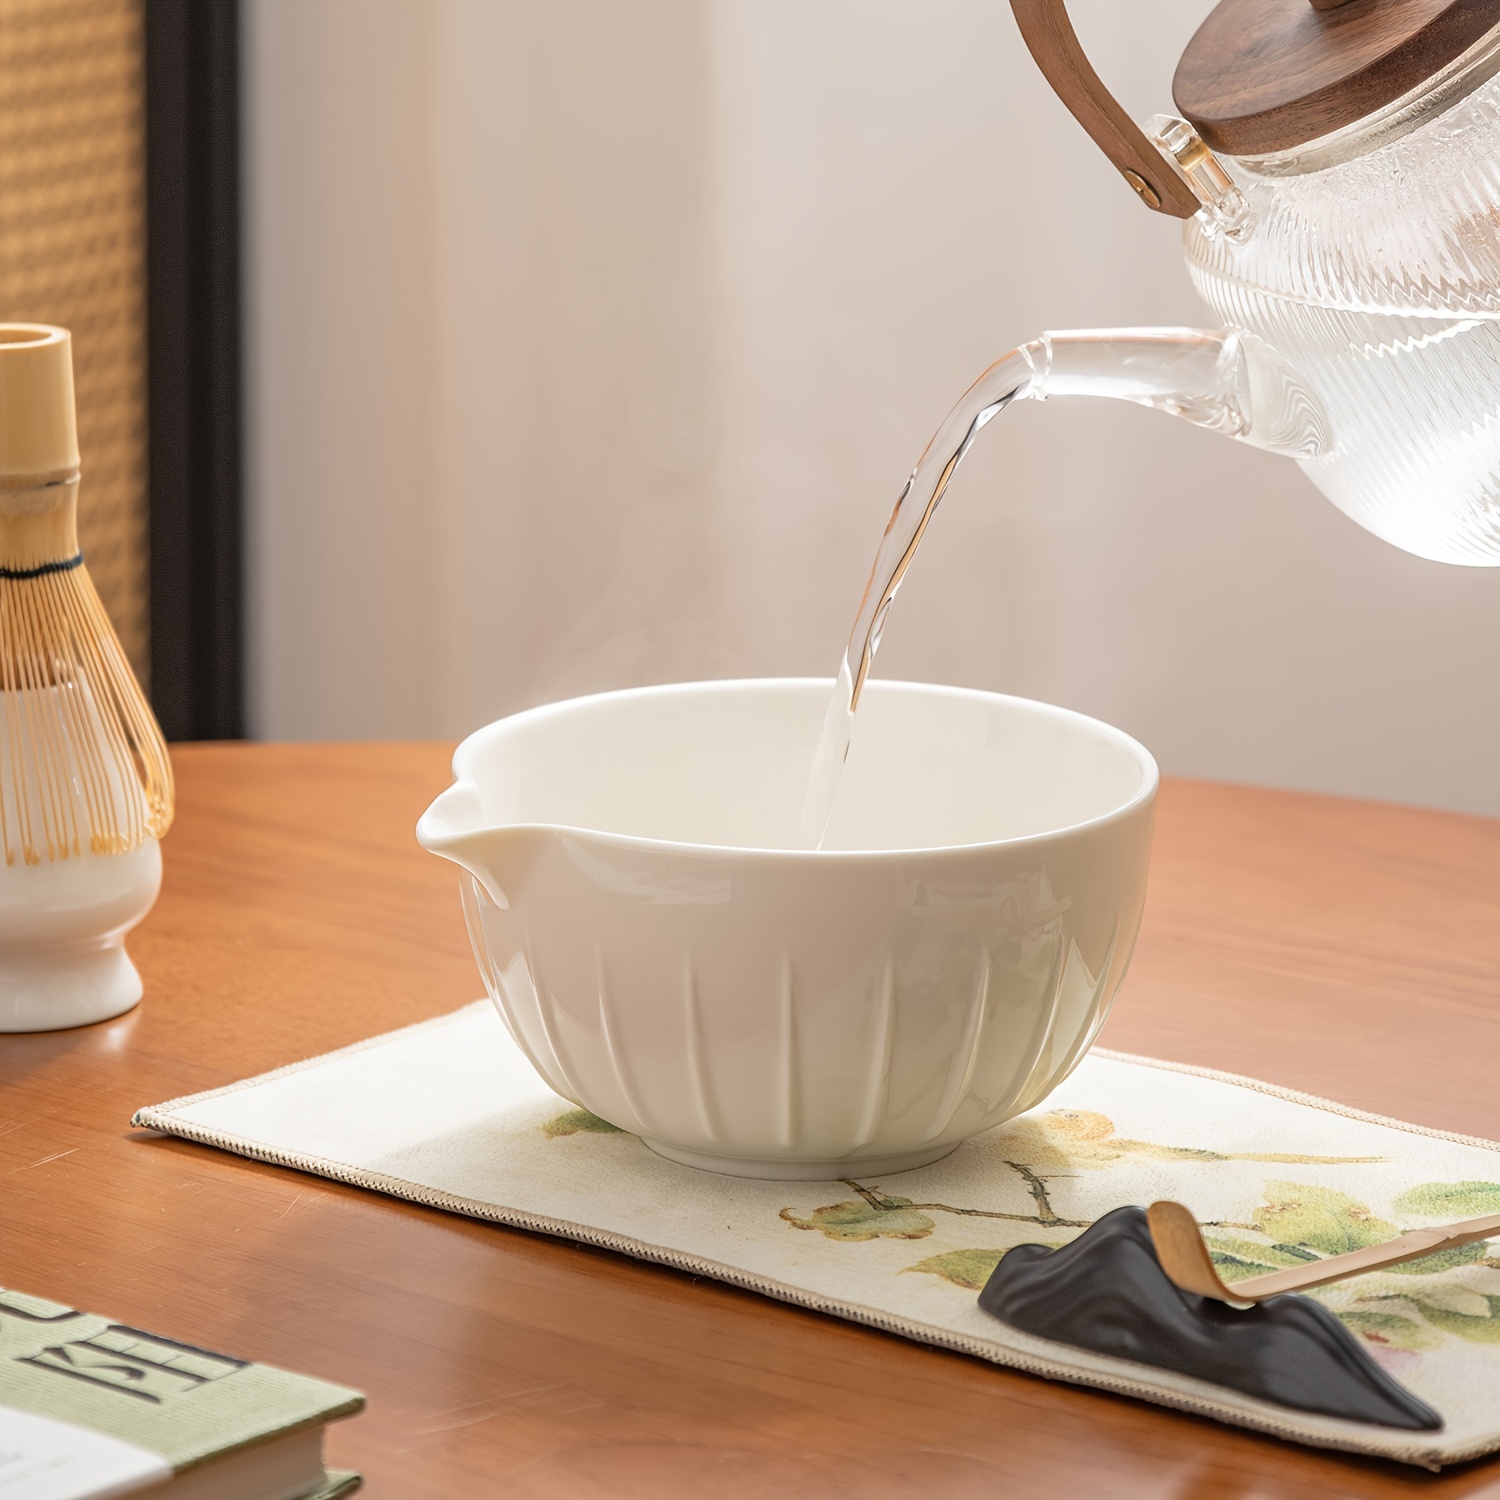 Artcome Juego de té matcha japonés, cuenco de vidrio con boquilla para  verter, batidor de bambú, soporte para batidor de cerámica, estuche de  madera